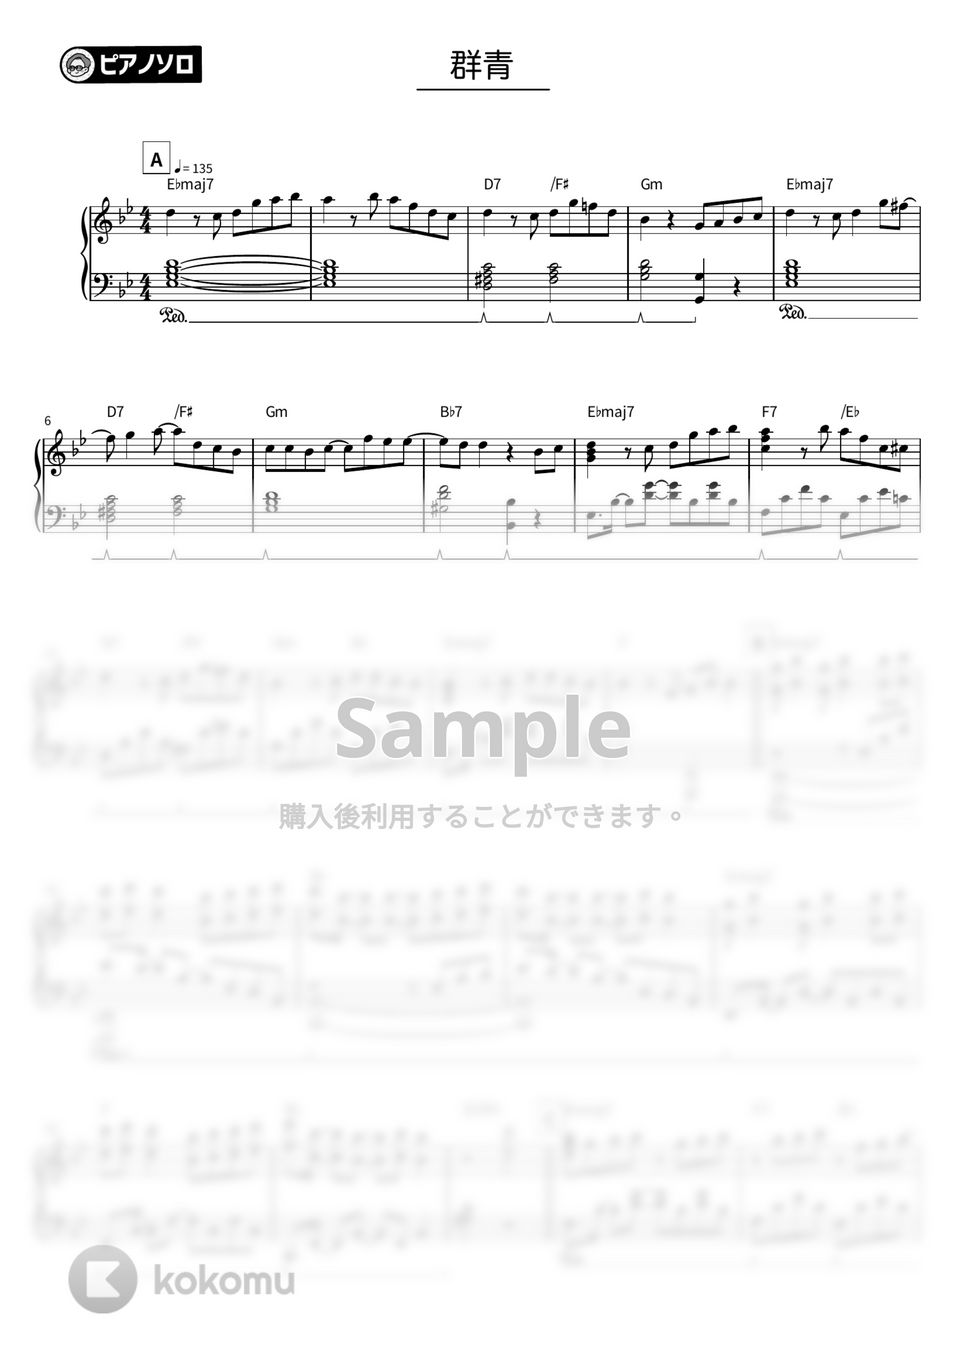 YOASOBI - 群青(リアレンジver. ) by シータピアノ